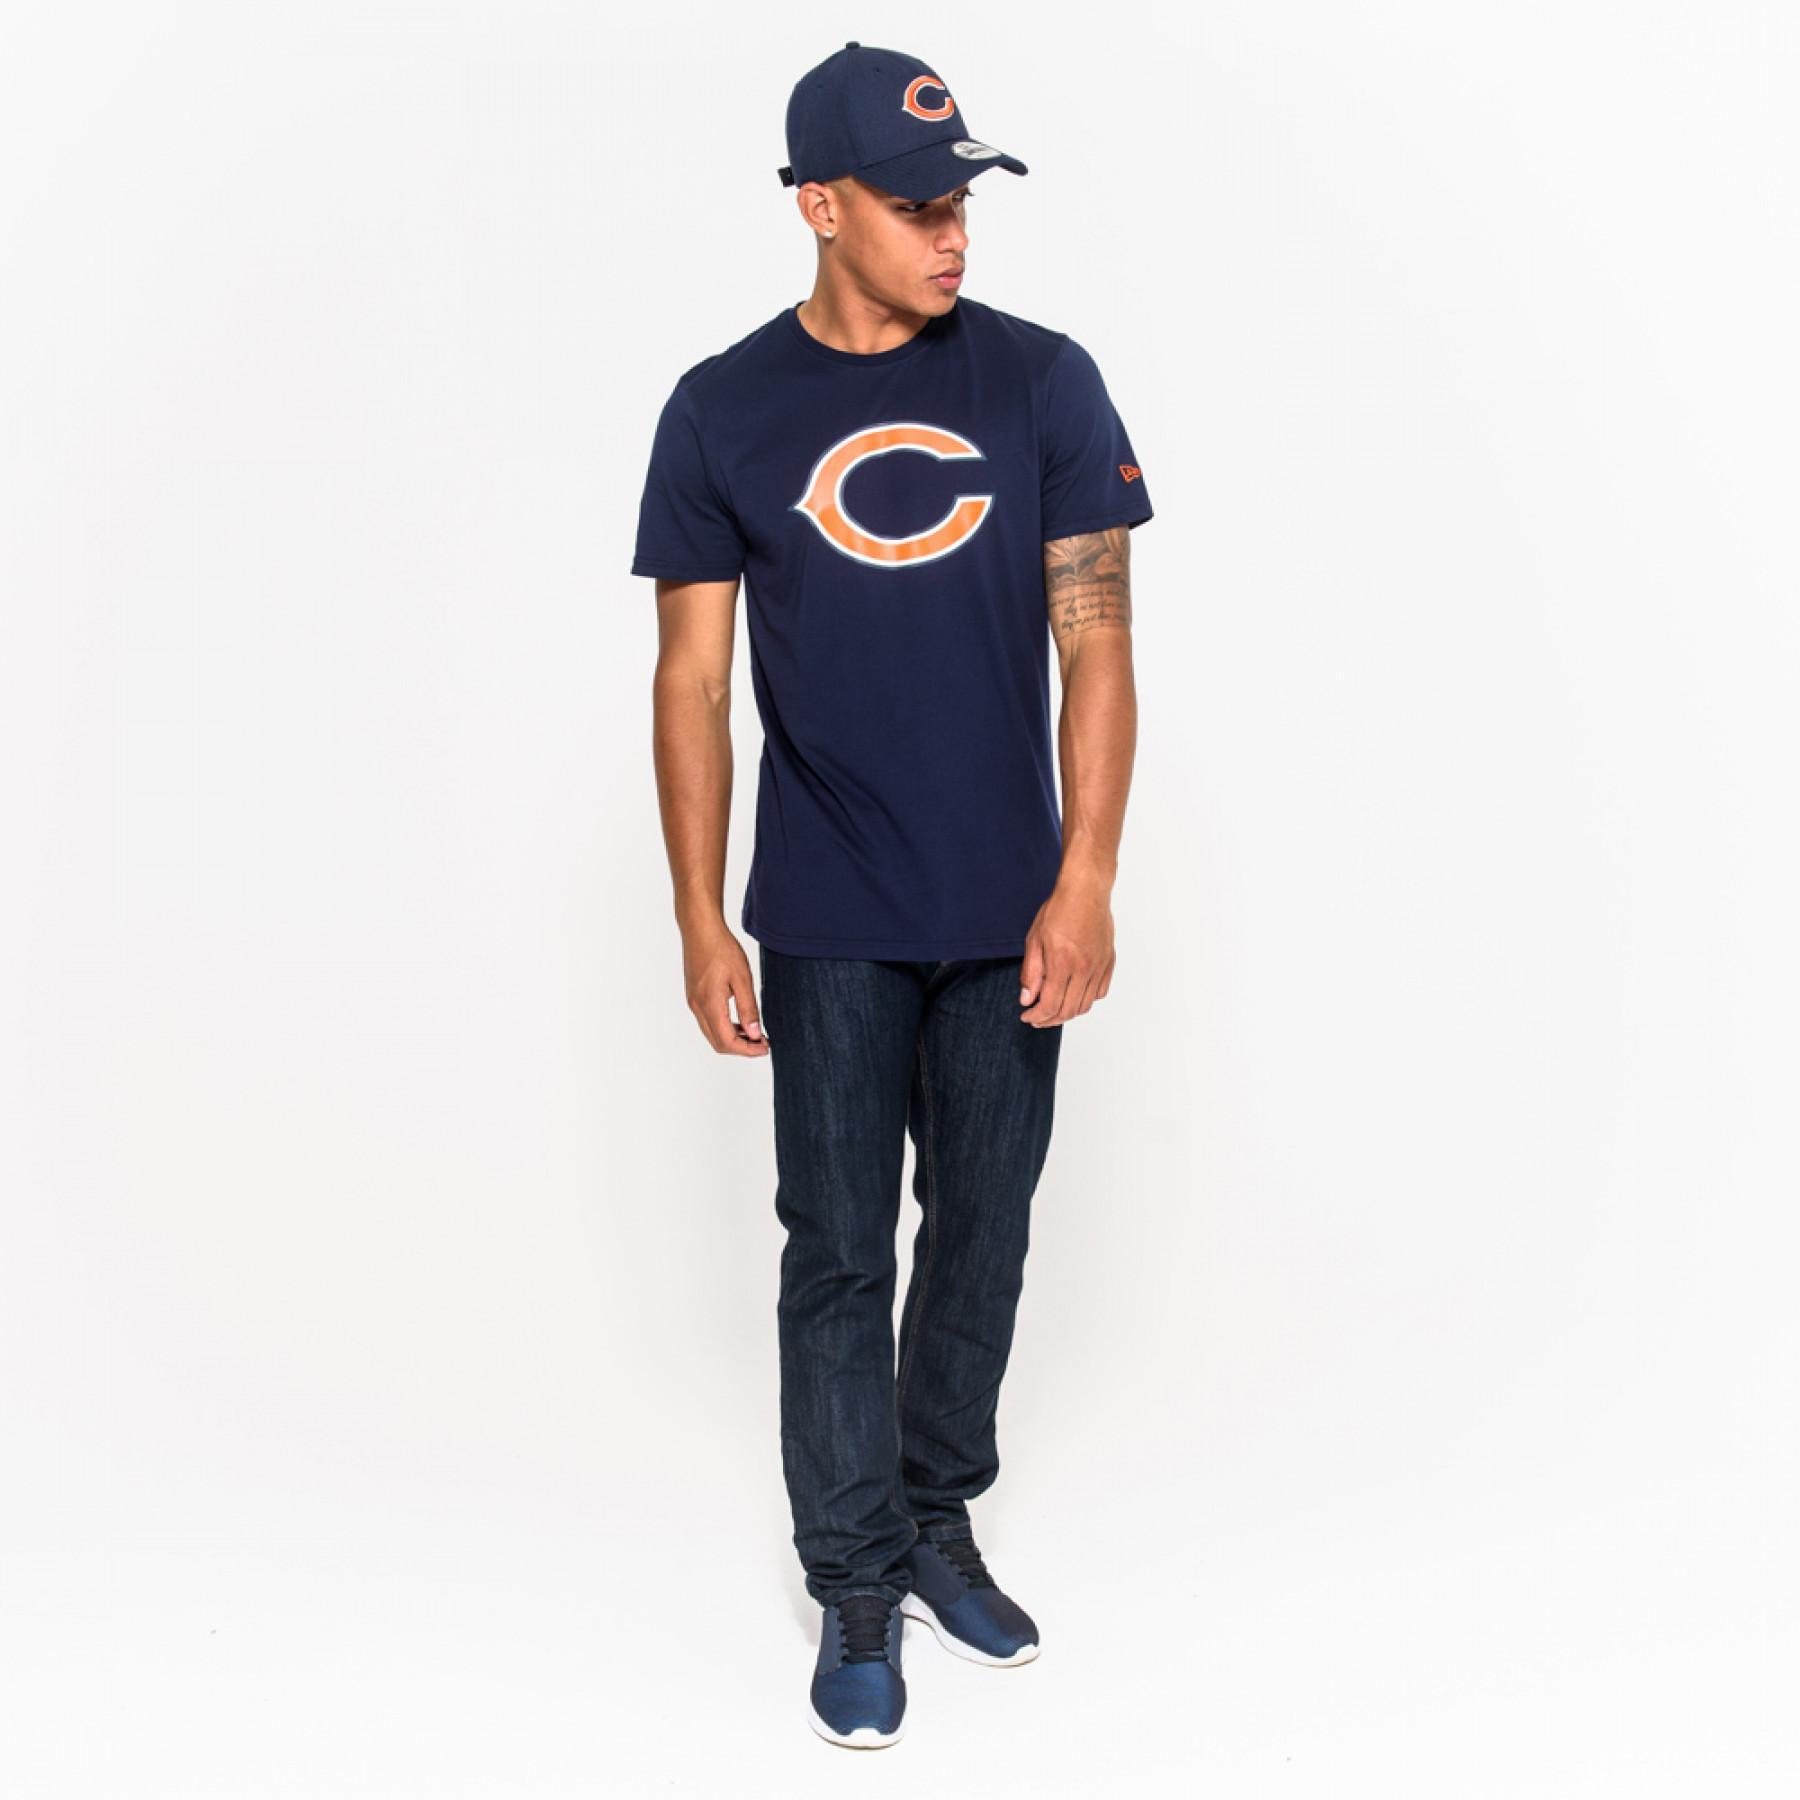 Camiseta New Era logo Chicago Bears